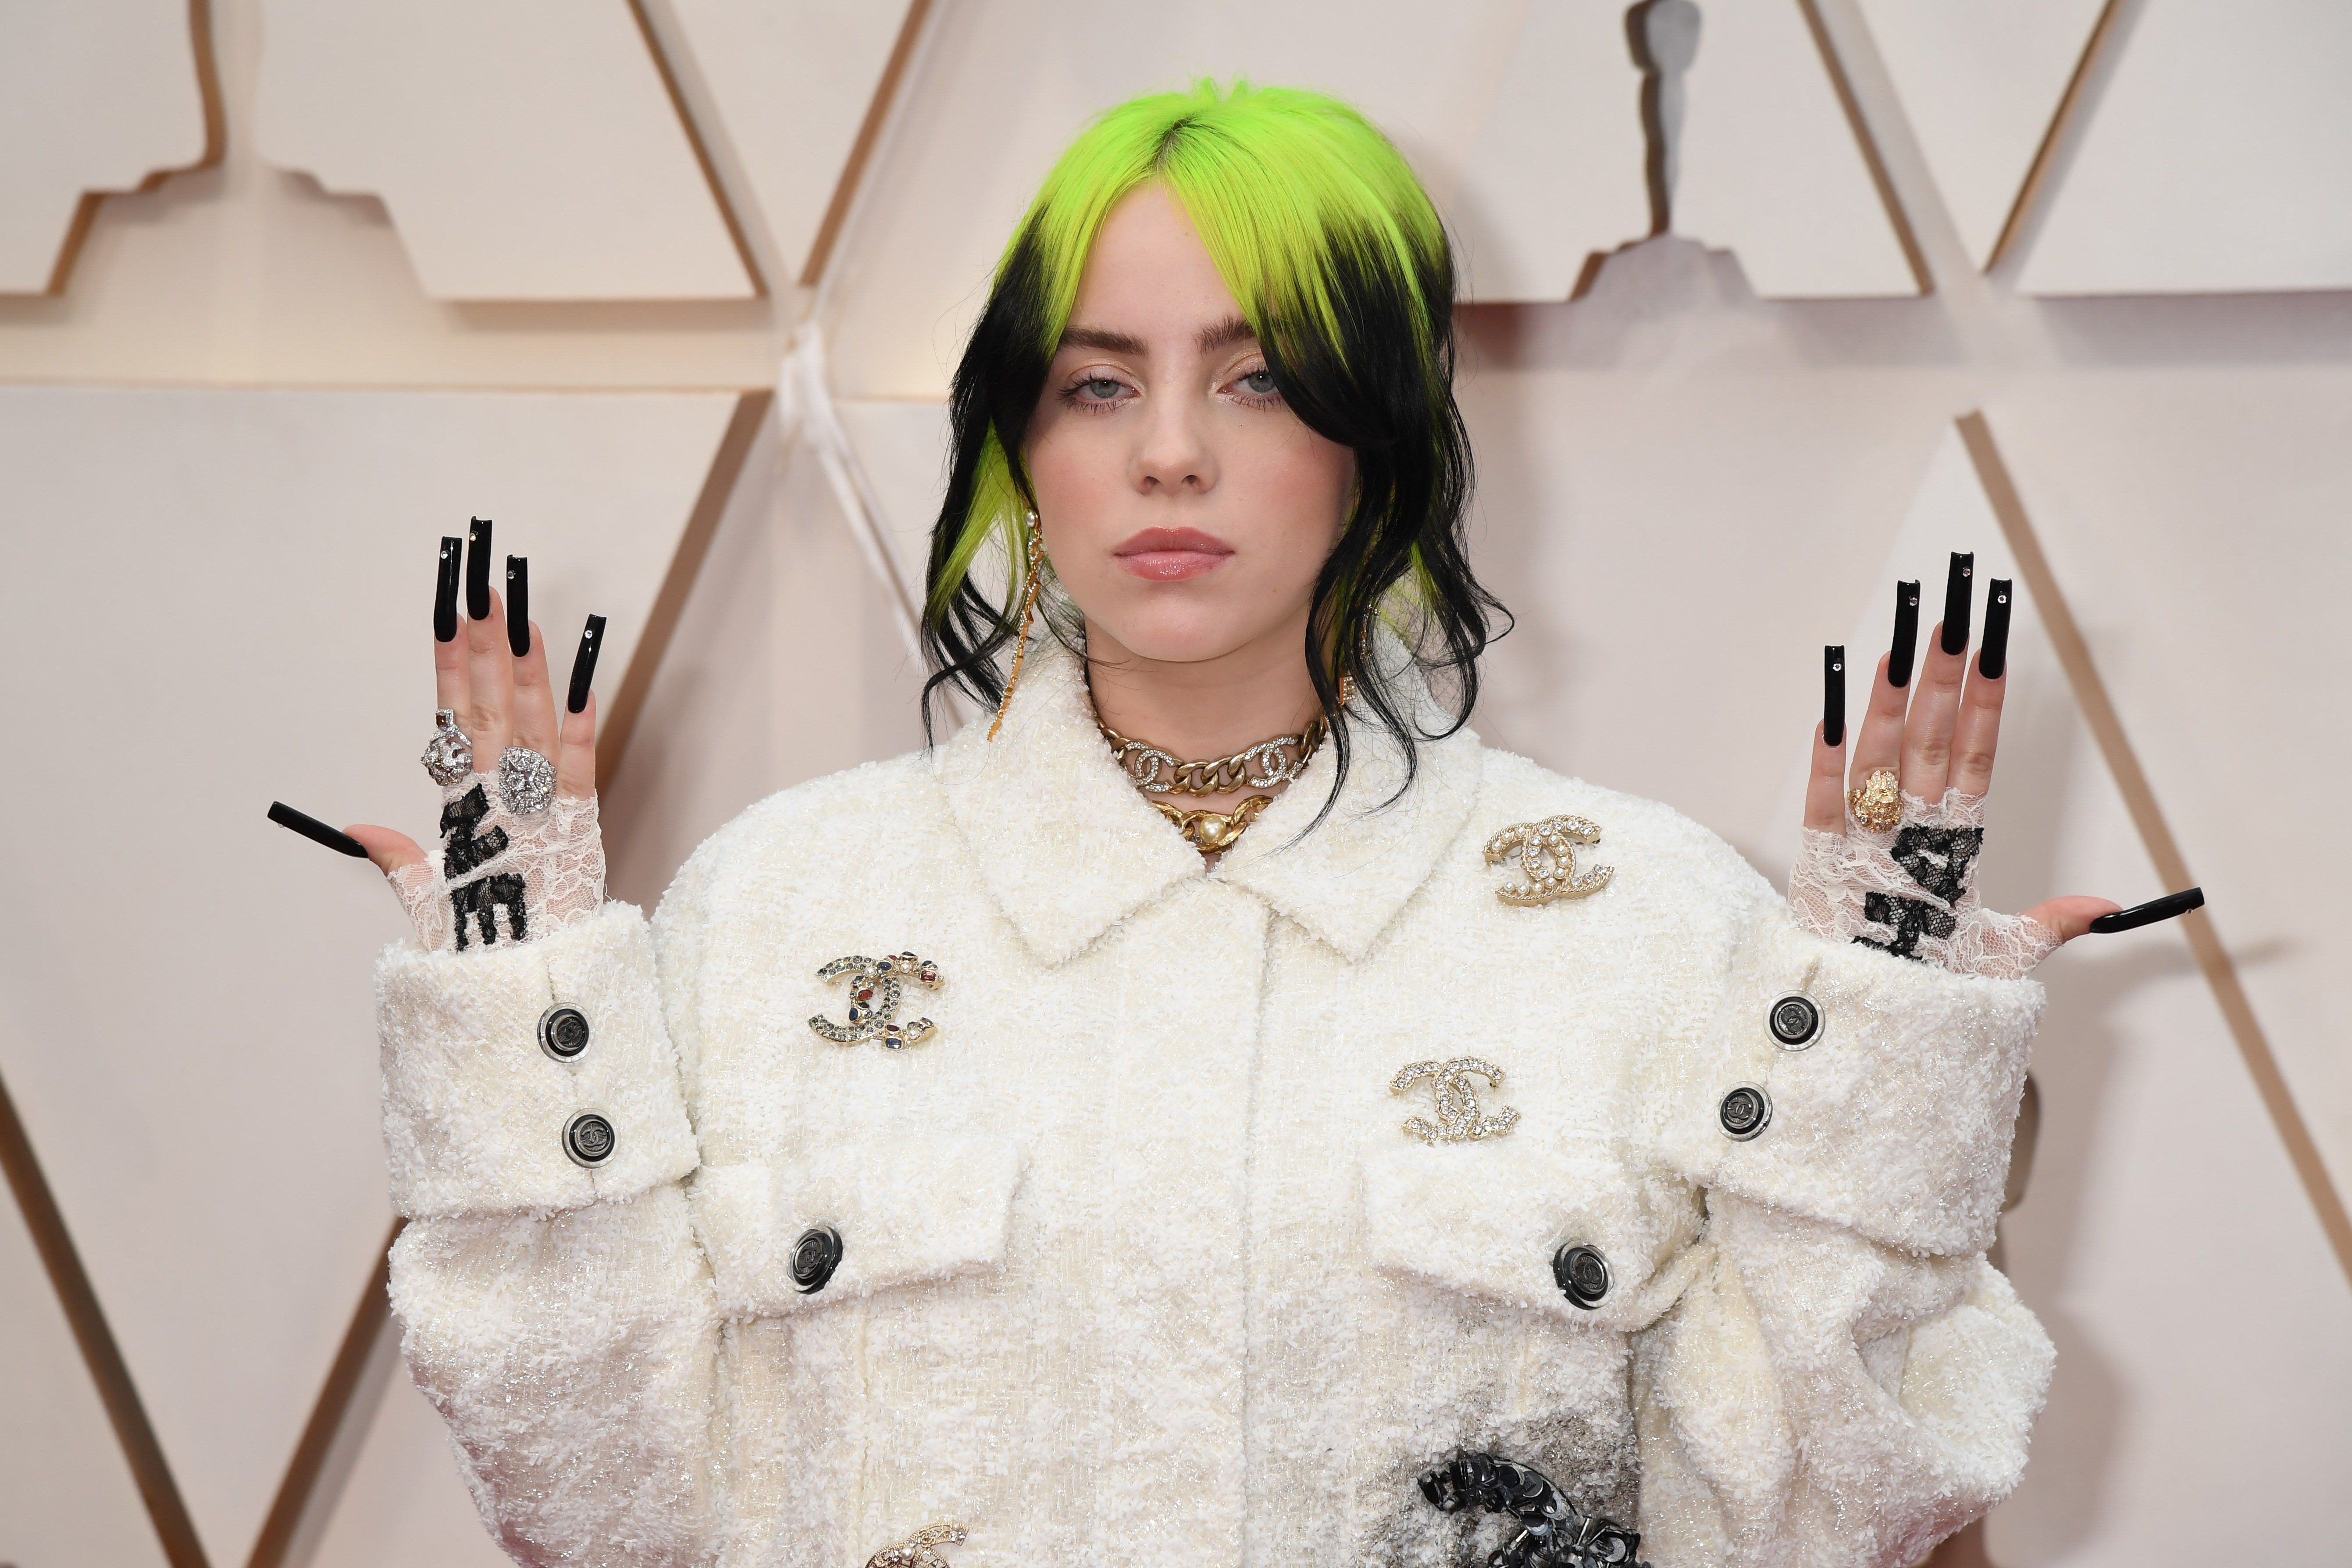 Oscars 2020: Billie Eilish Wears All Chanel and Black Jeweled Nail